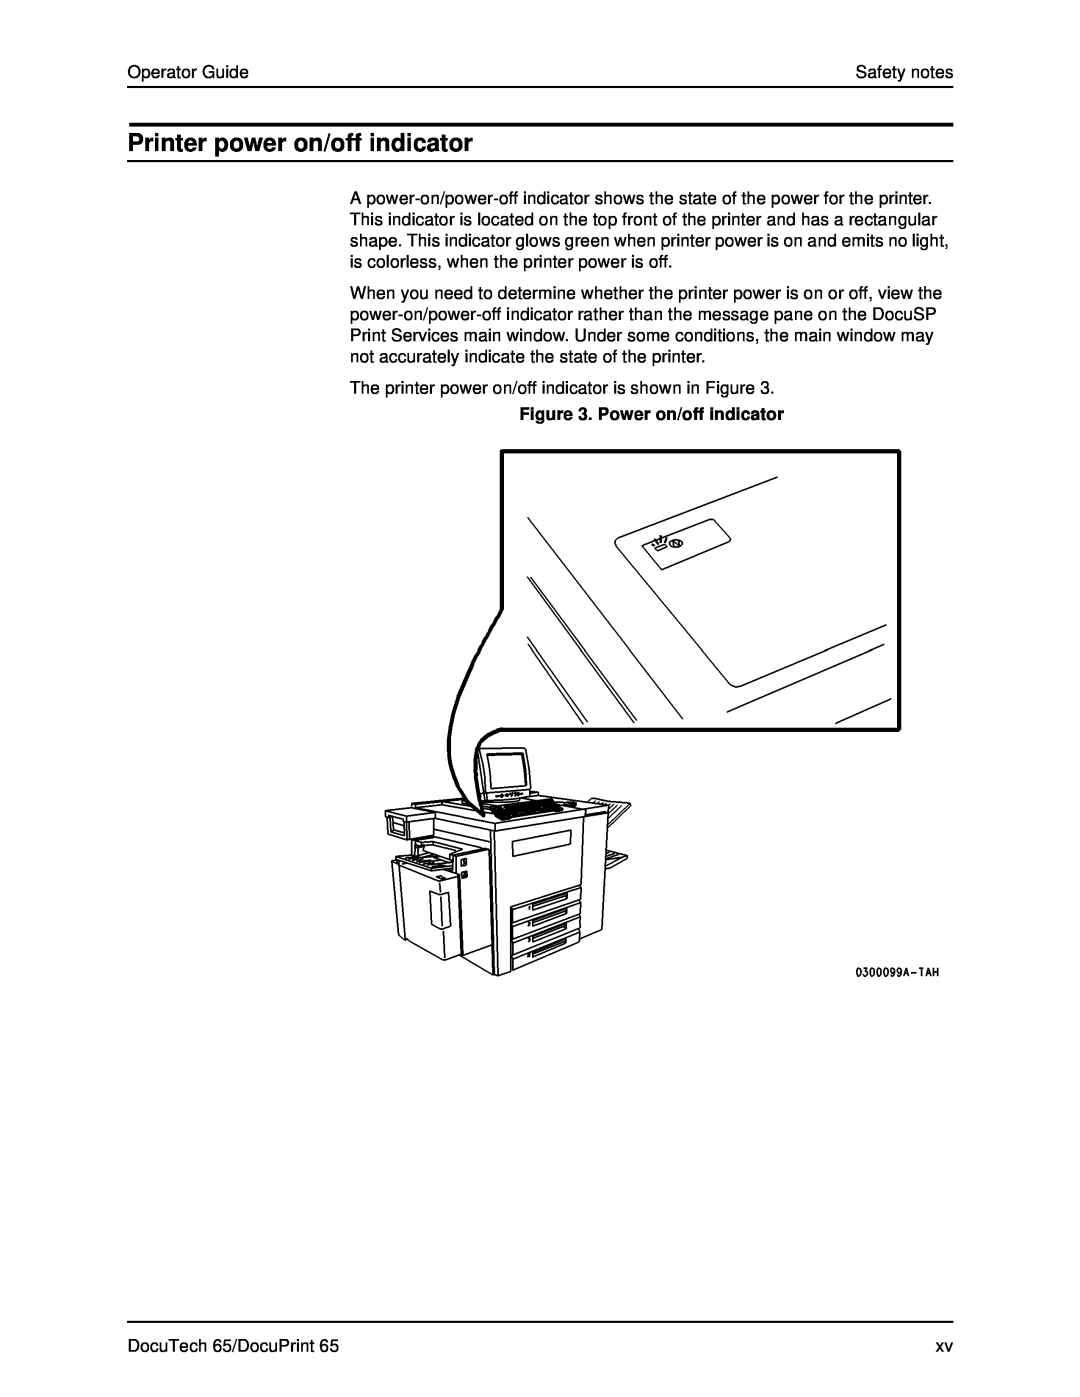 Xerox DOCUTECH 65 manual Printer power on/off indicator, Power on/off indicator 